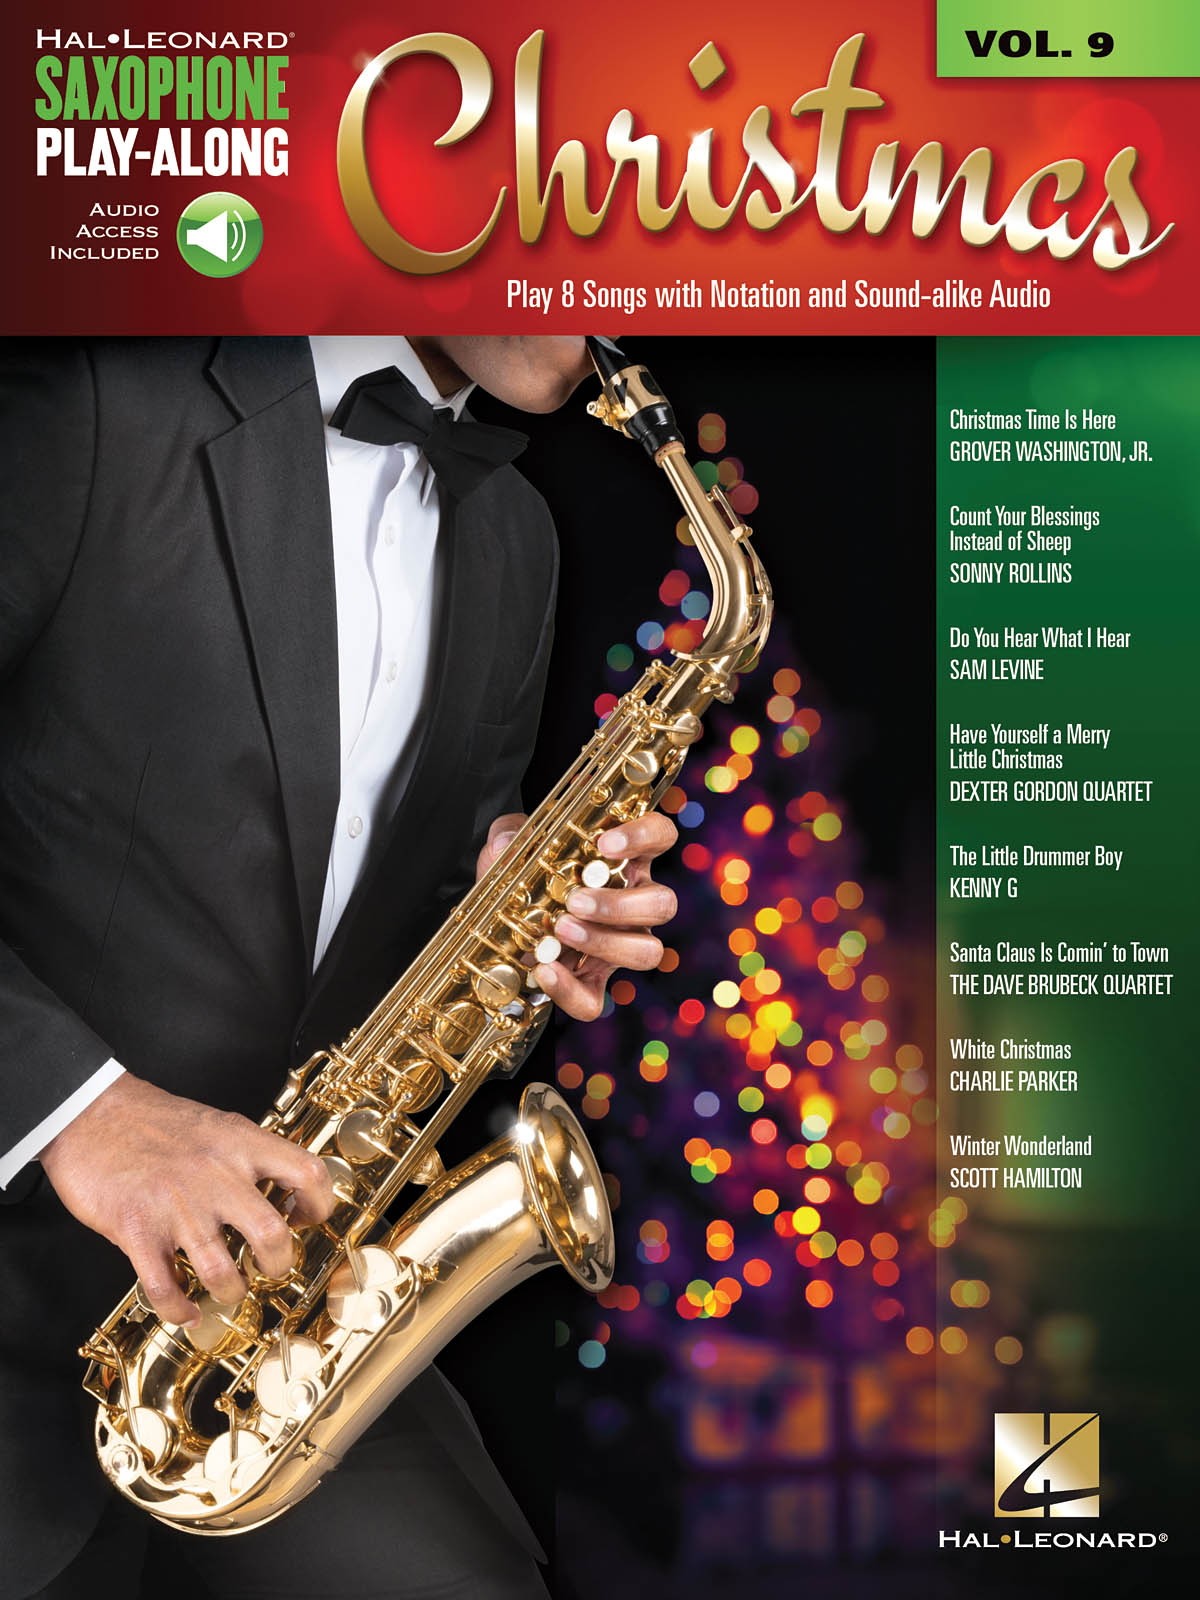 Saxophone Play-Along Volume 9: Christmas